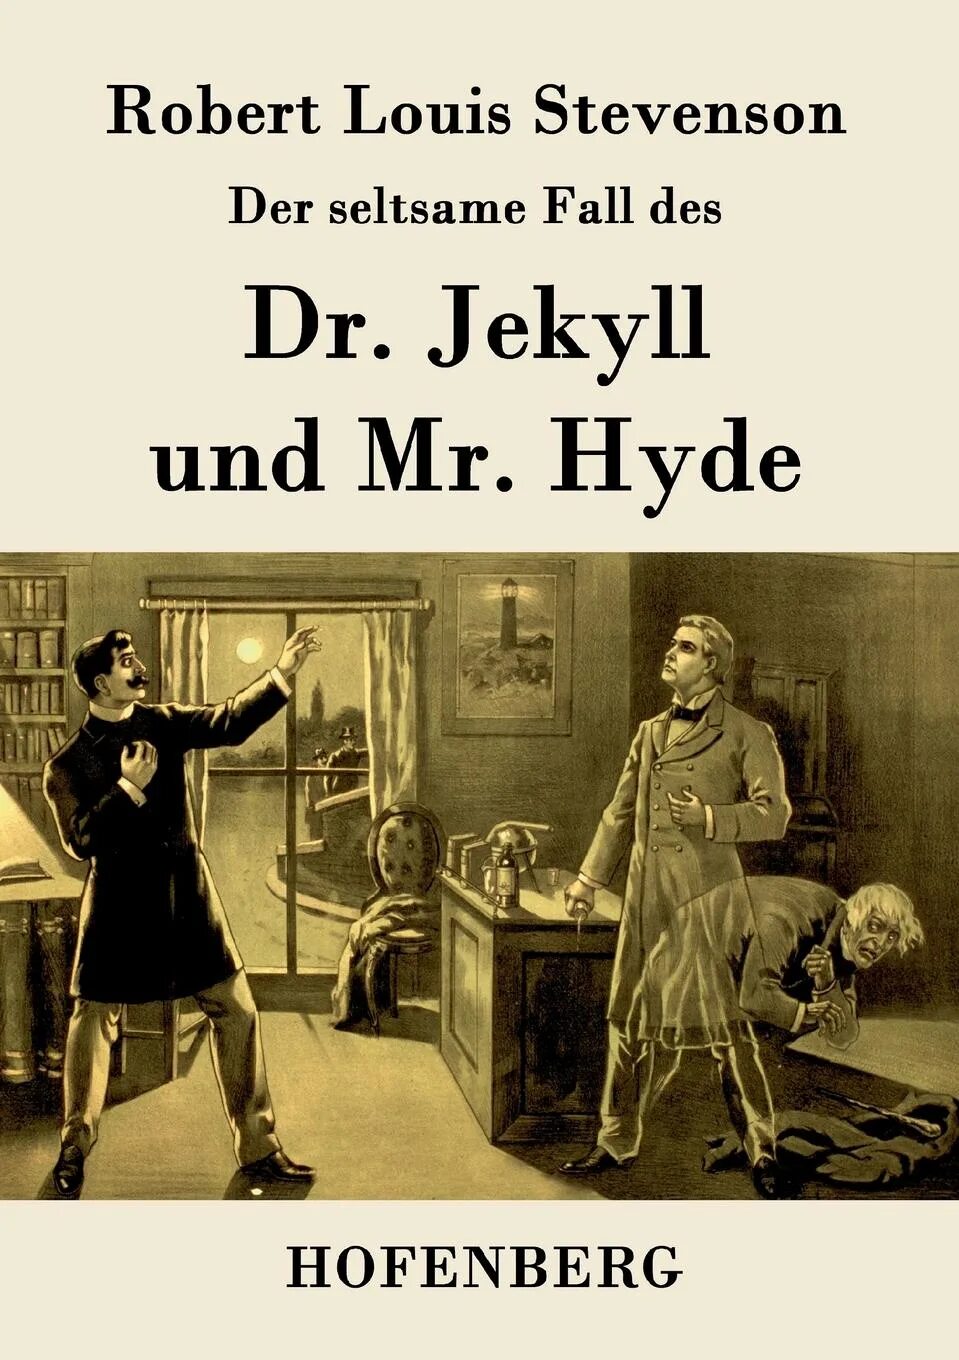 Стивенсон хайд. Dr Jekyll and Mr Hyde Robert Louis Stevenson. Dr. Jekyll und Mr. Hyde. Стивенсона «странная история доктора Джекиля и мистера Хайда».. Мистер Хайд и доктор Джекил книга.